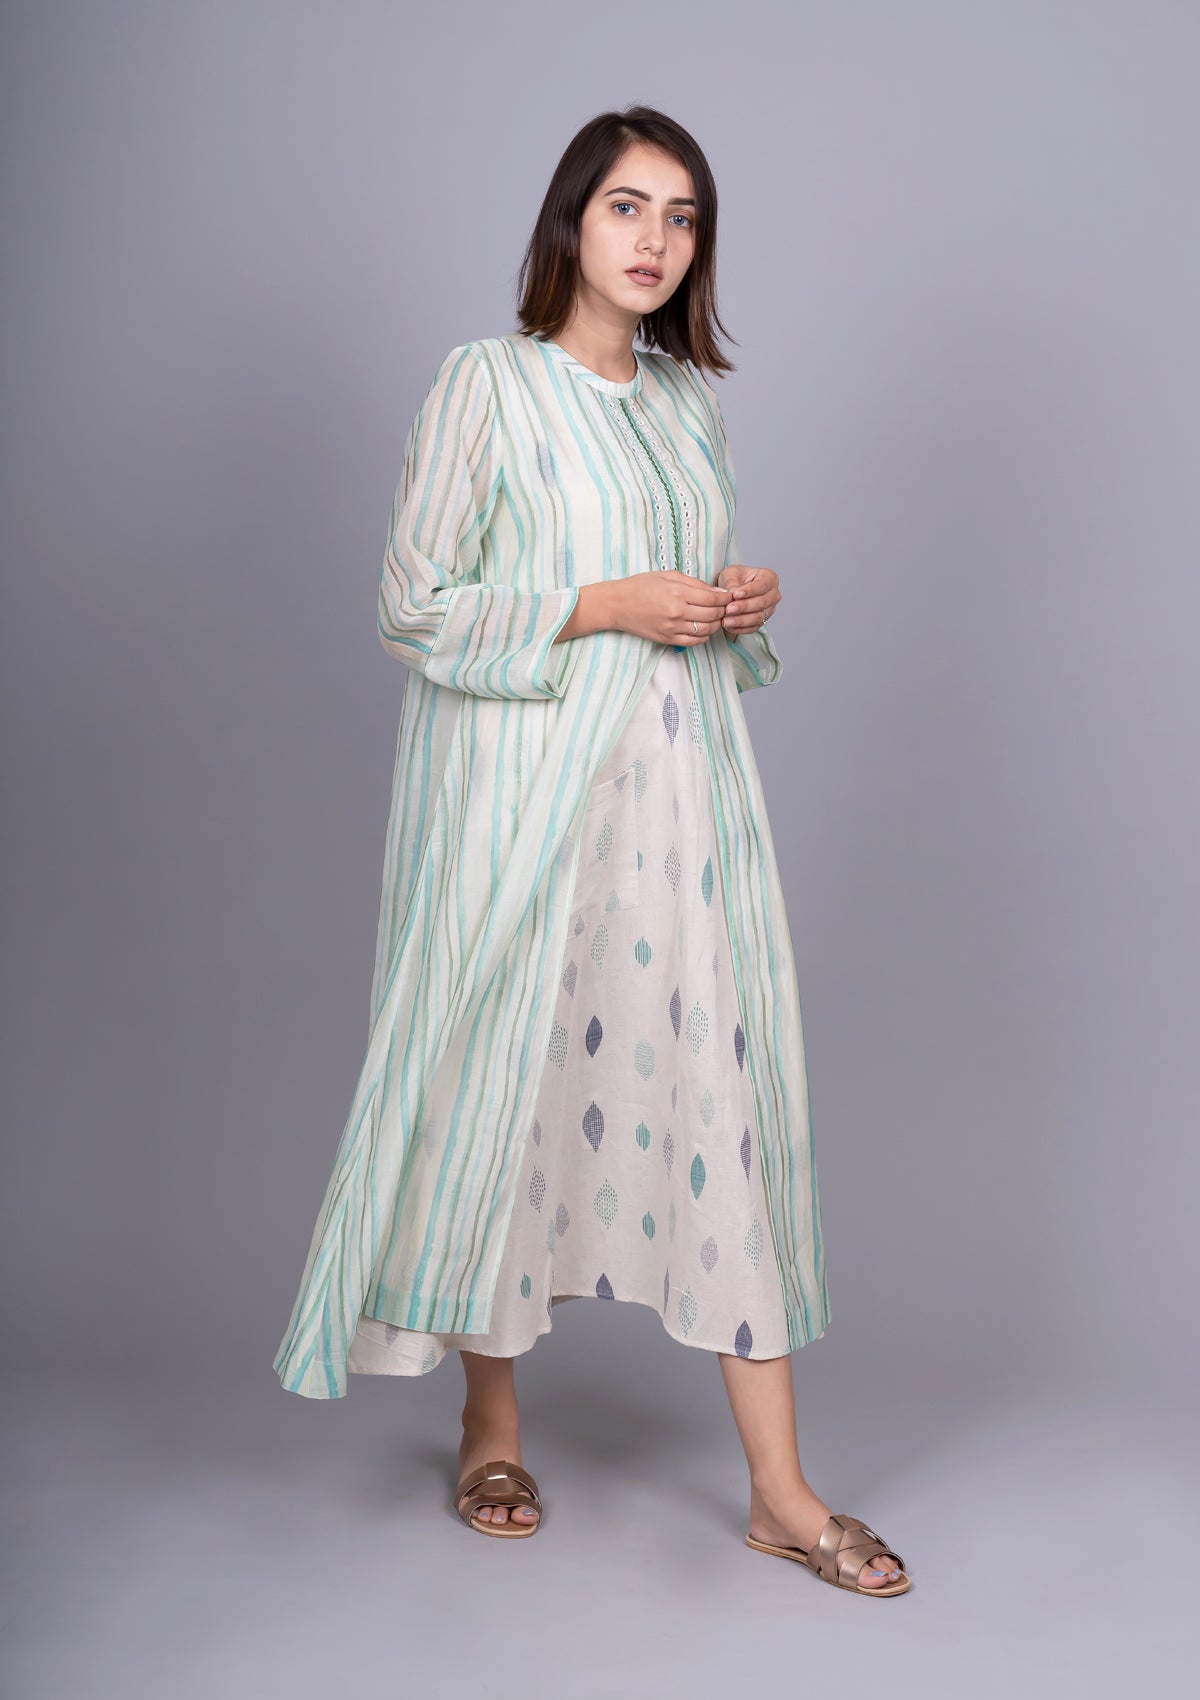 Mint Green Chanderi Stripes Dress With Cotton Block Printed Sleeveless Dress